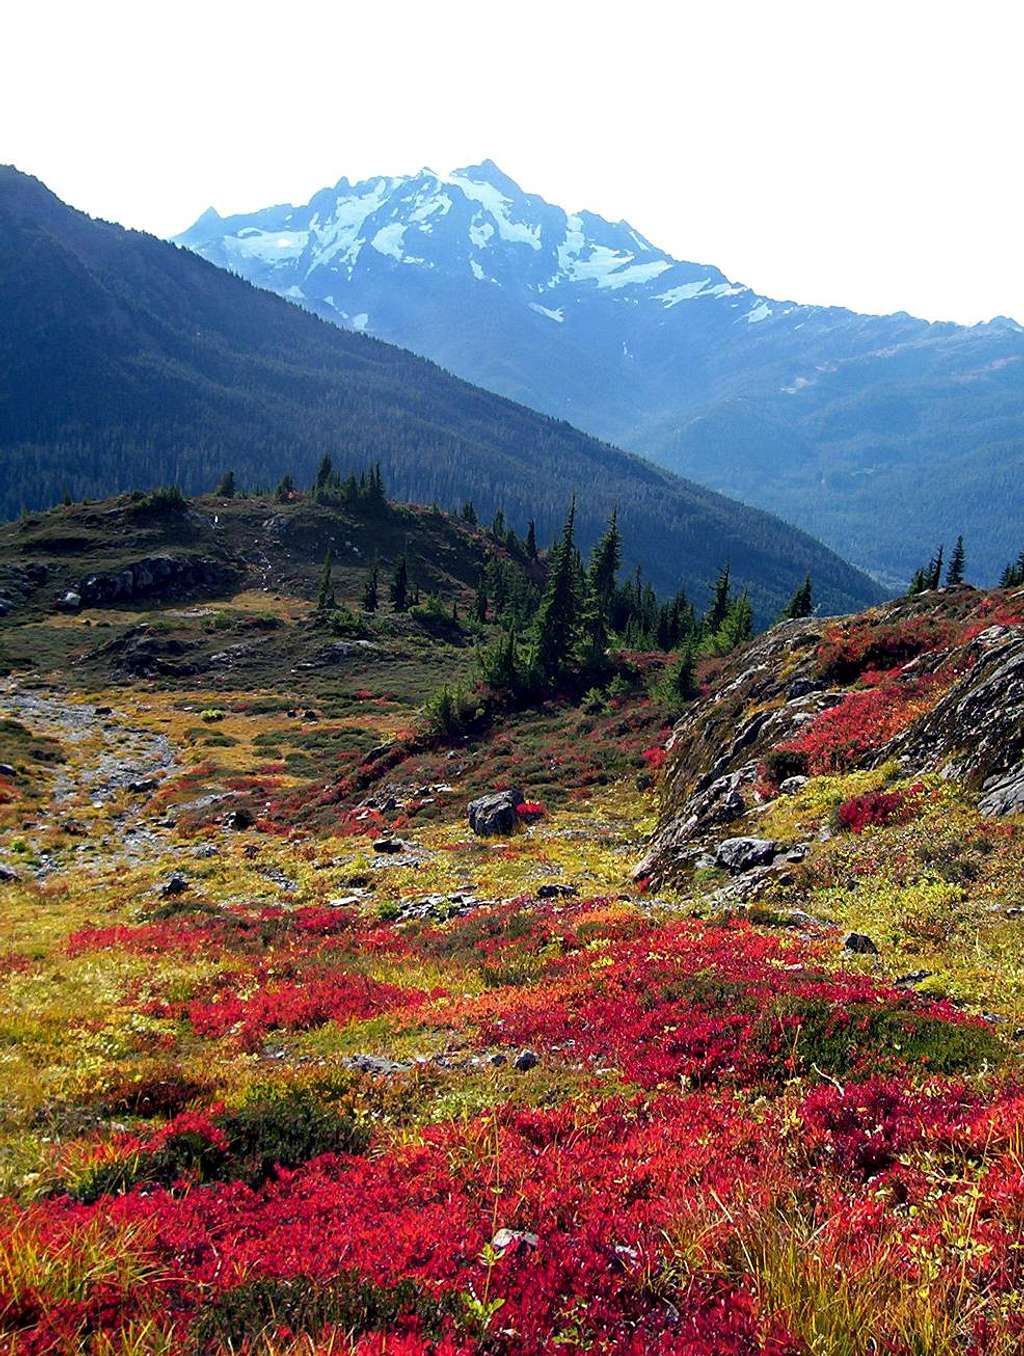 Mount Shuksan and Fall Colors